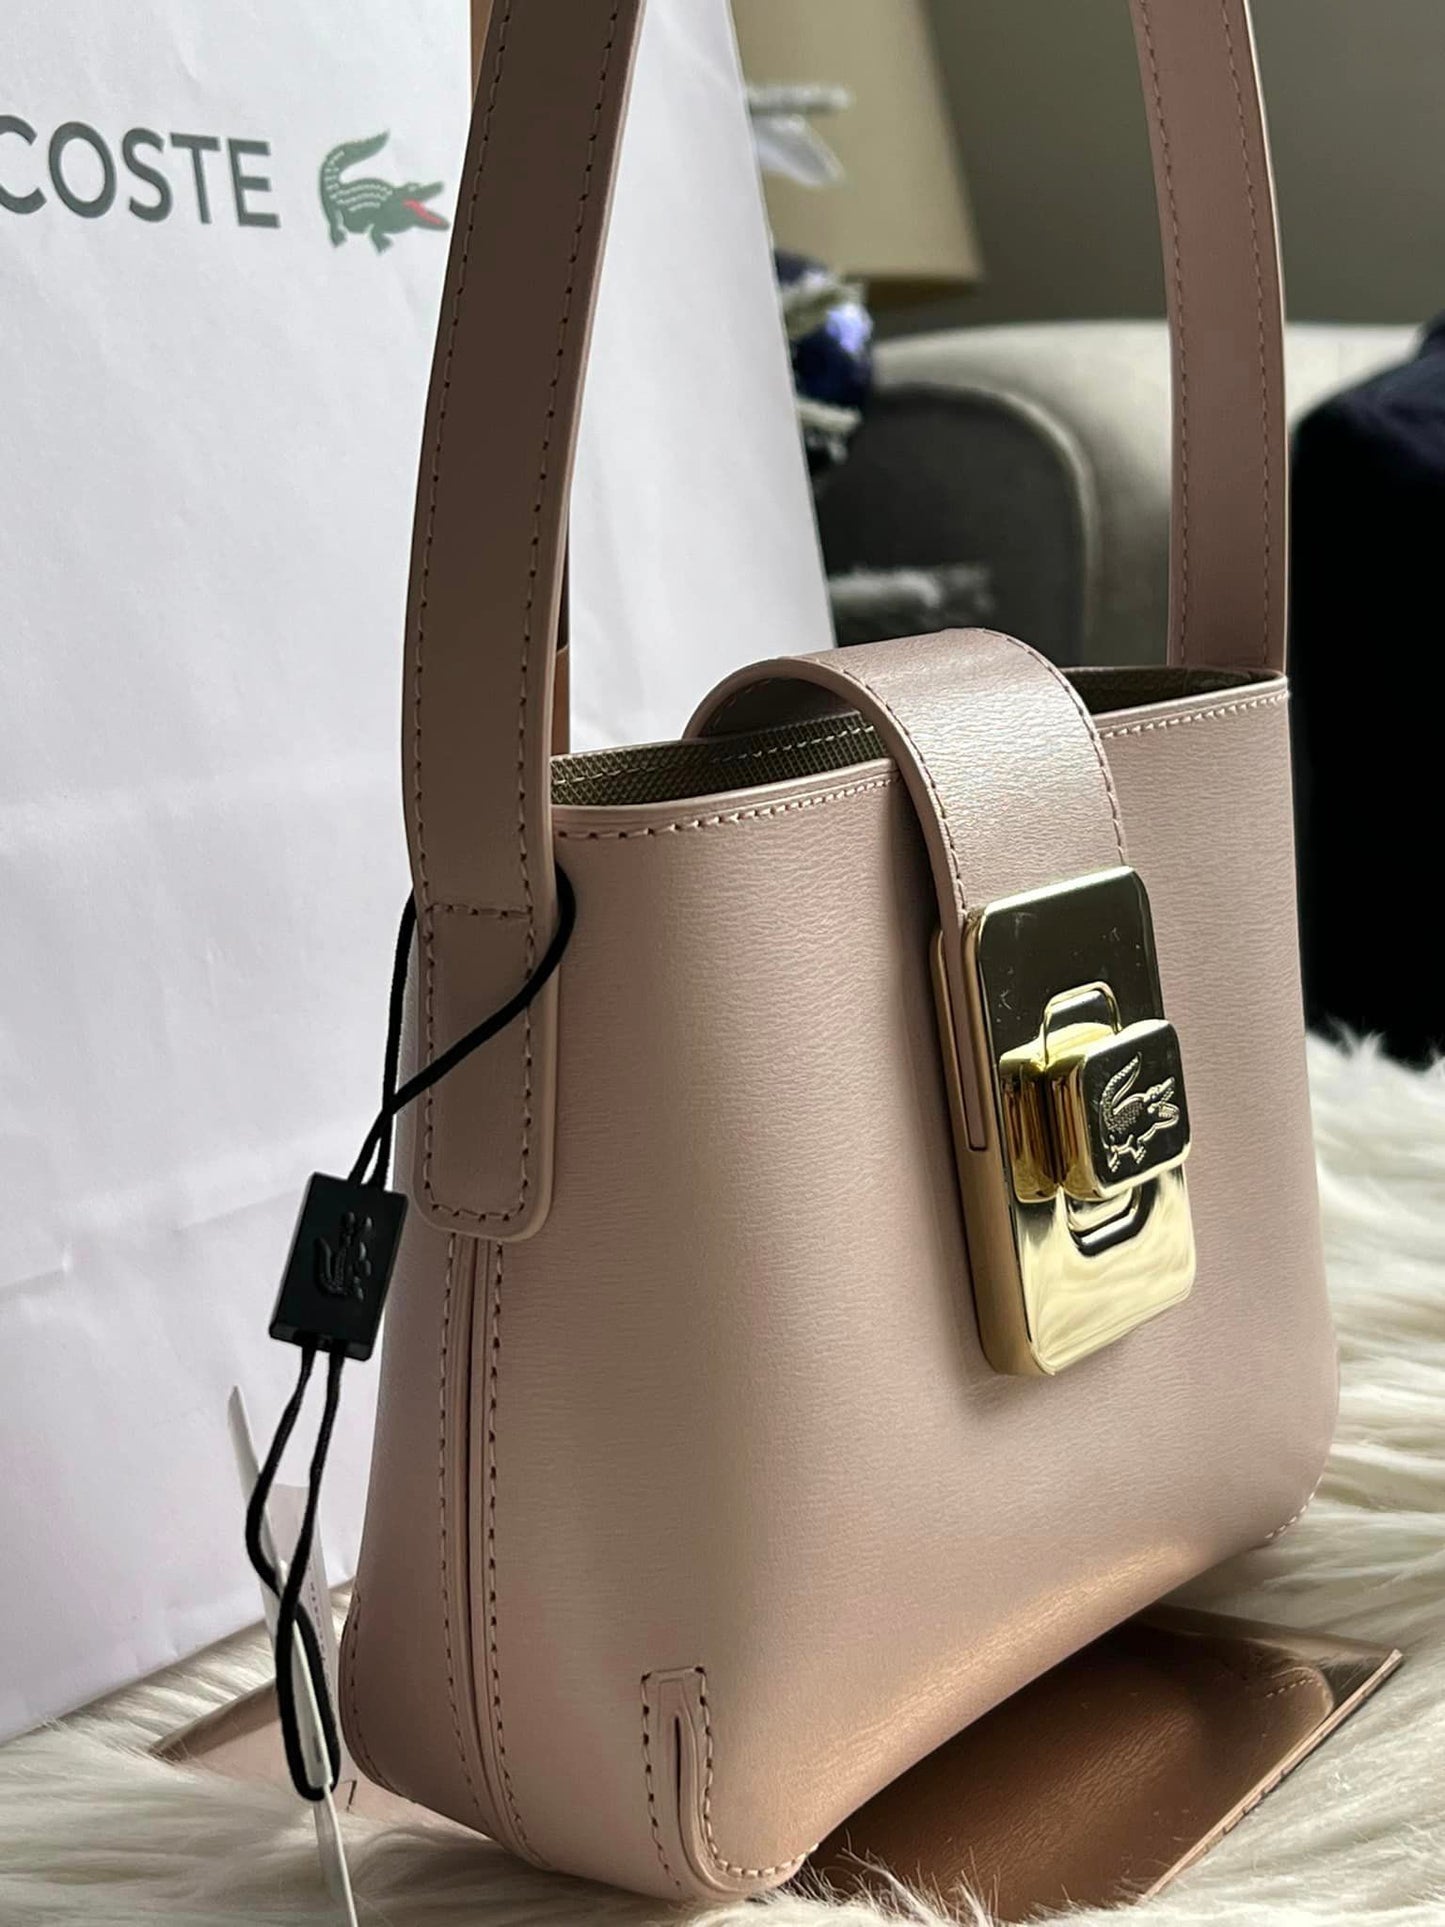 Lacoste Women’s Amelia Metal Clasp Embossed Leather Handbag - One Size